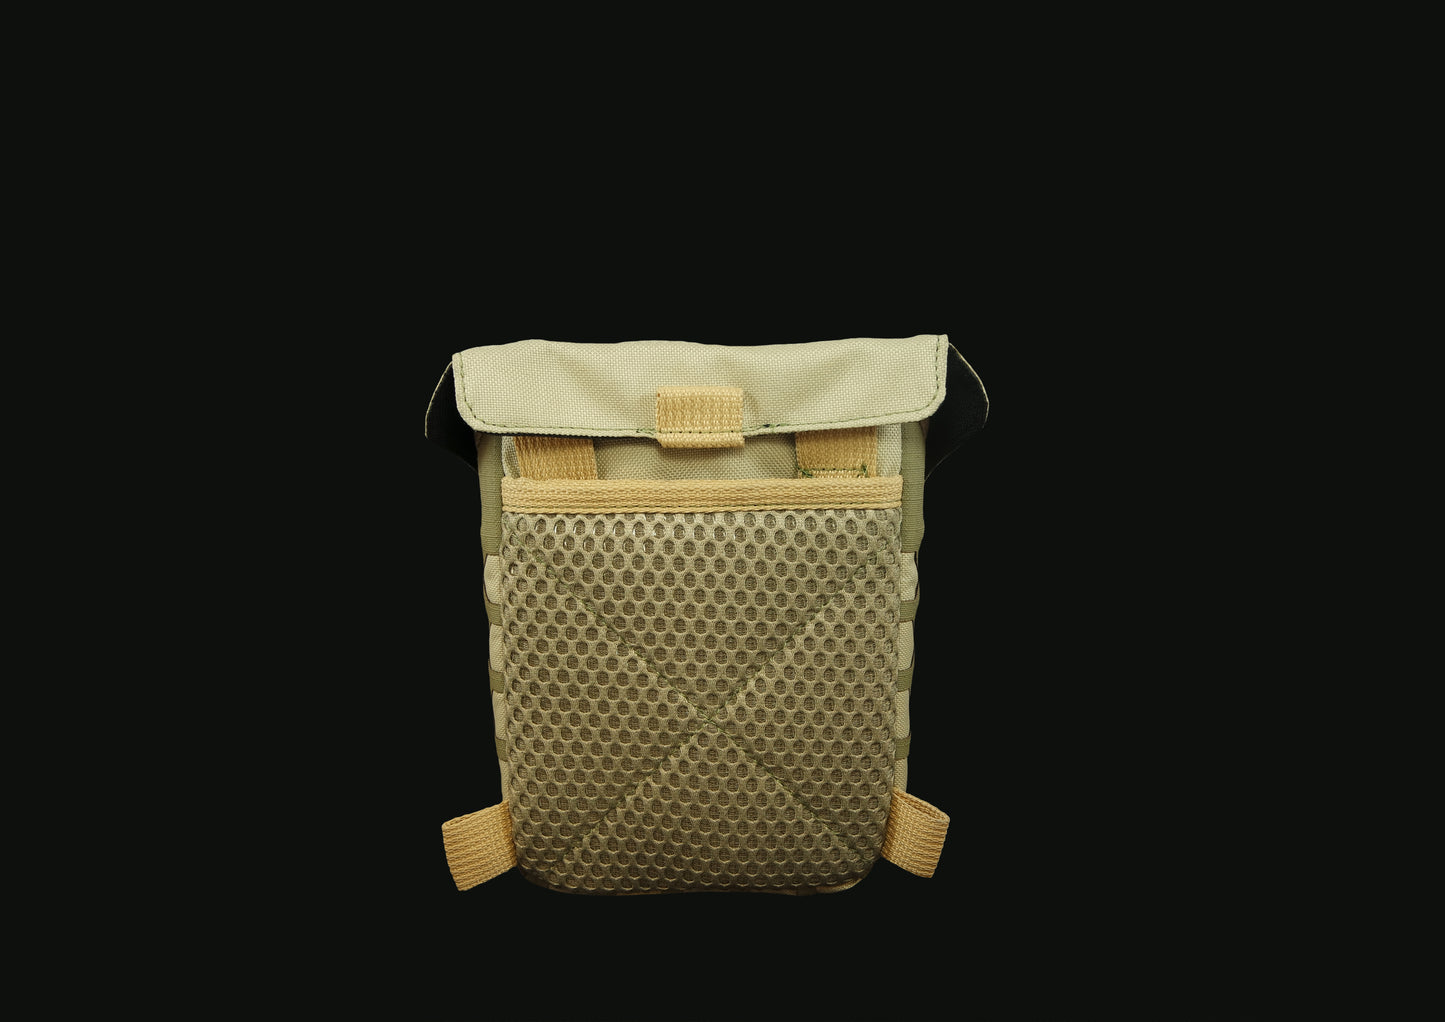 Impi Binocular bag and harness - FFSOutdoor